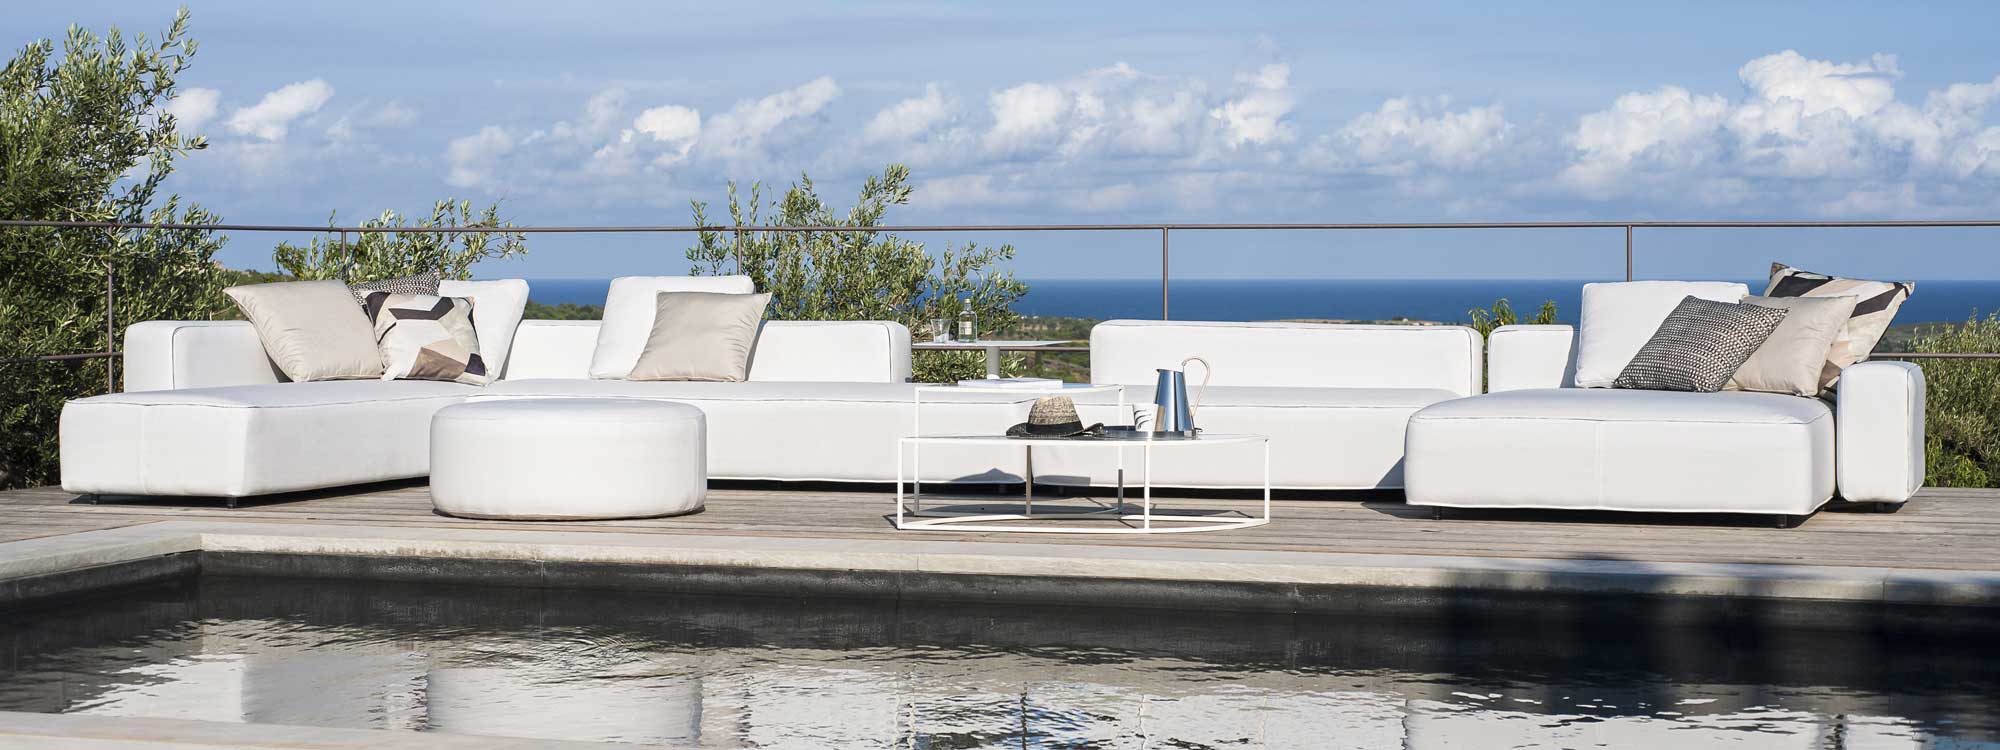 Apparatet Forstad Monumental Dandy Luxury Garden Sofa | RODA Italian Outdoor Furniture